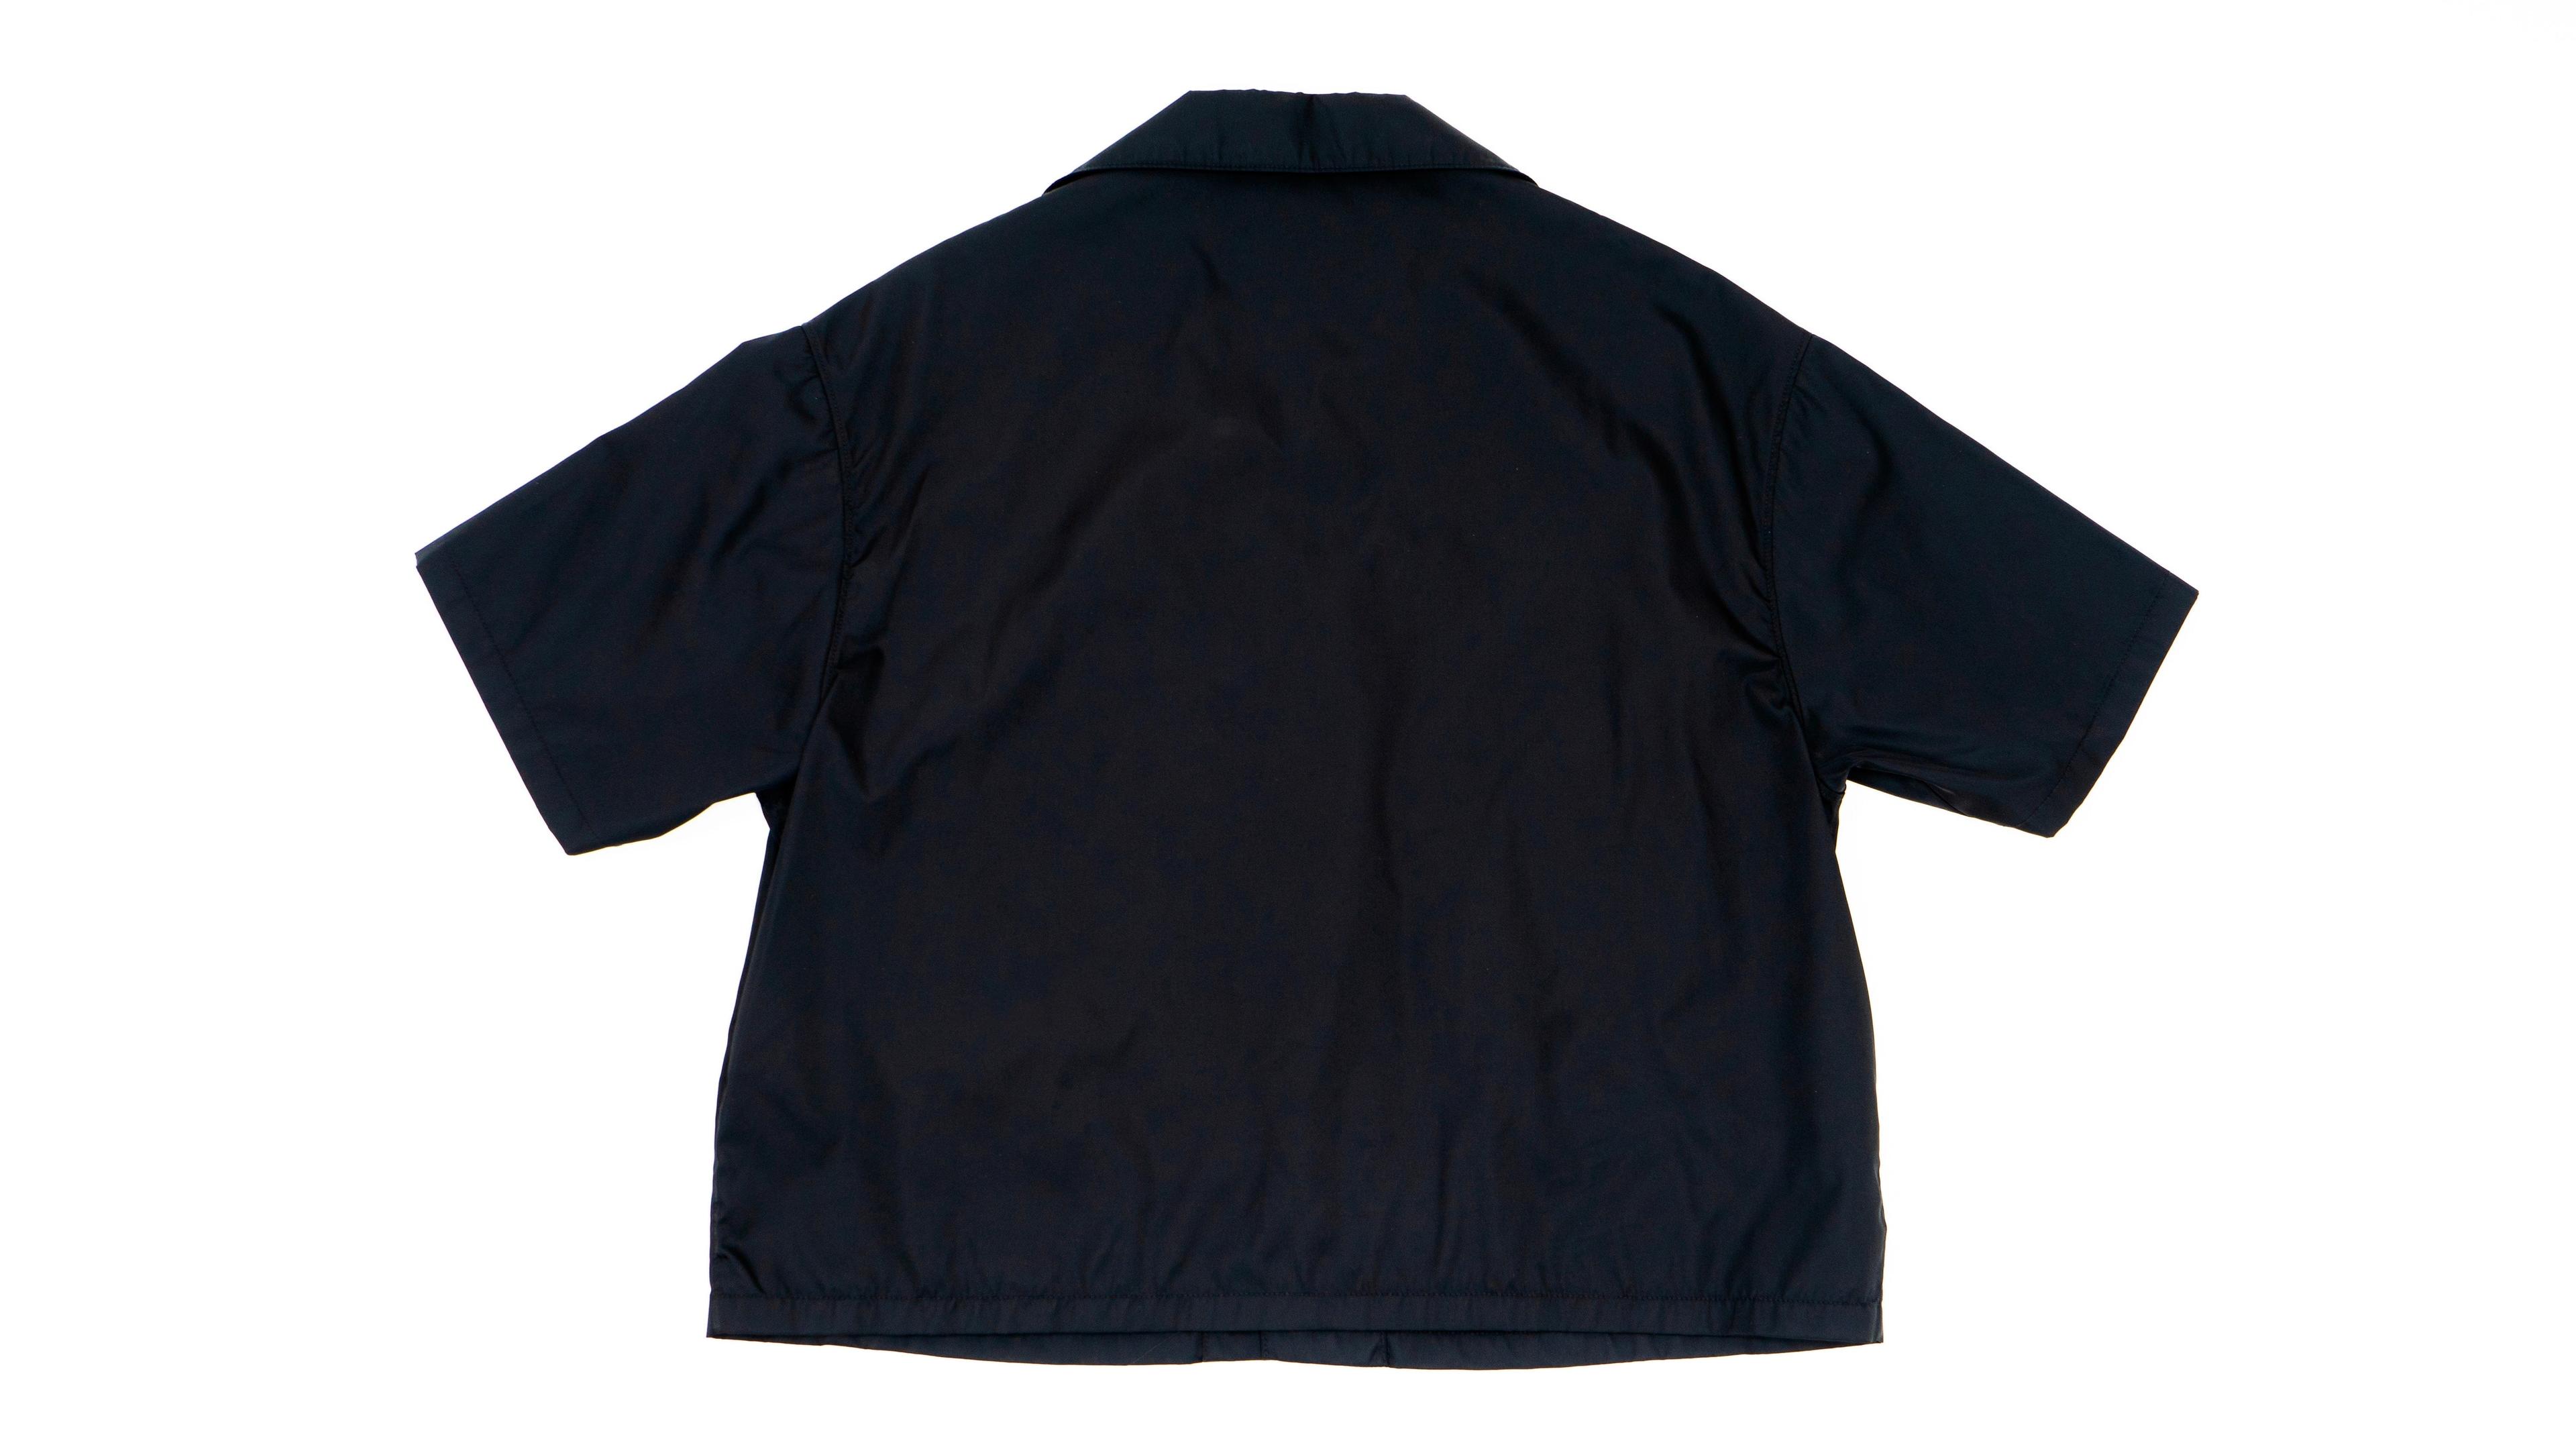 Alternate View 1 of Prada Re-Nylon Button Up Short Sleeve Tee Shirt Black Pre-Owned